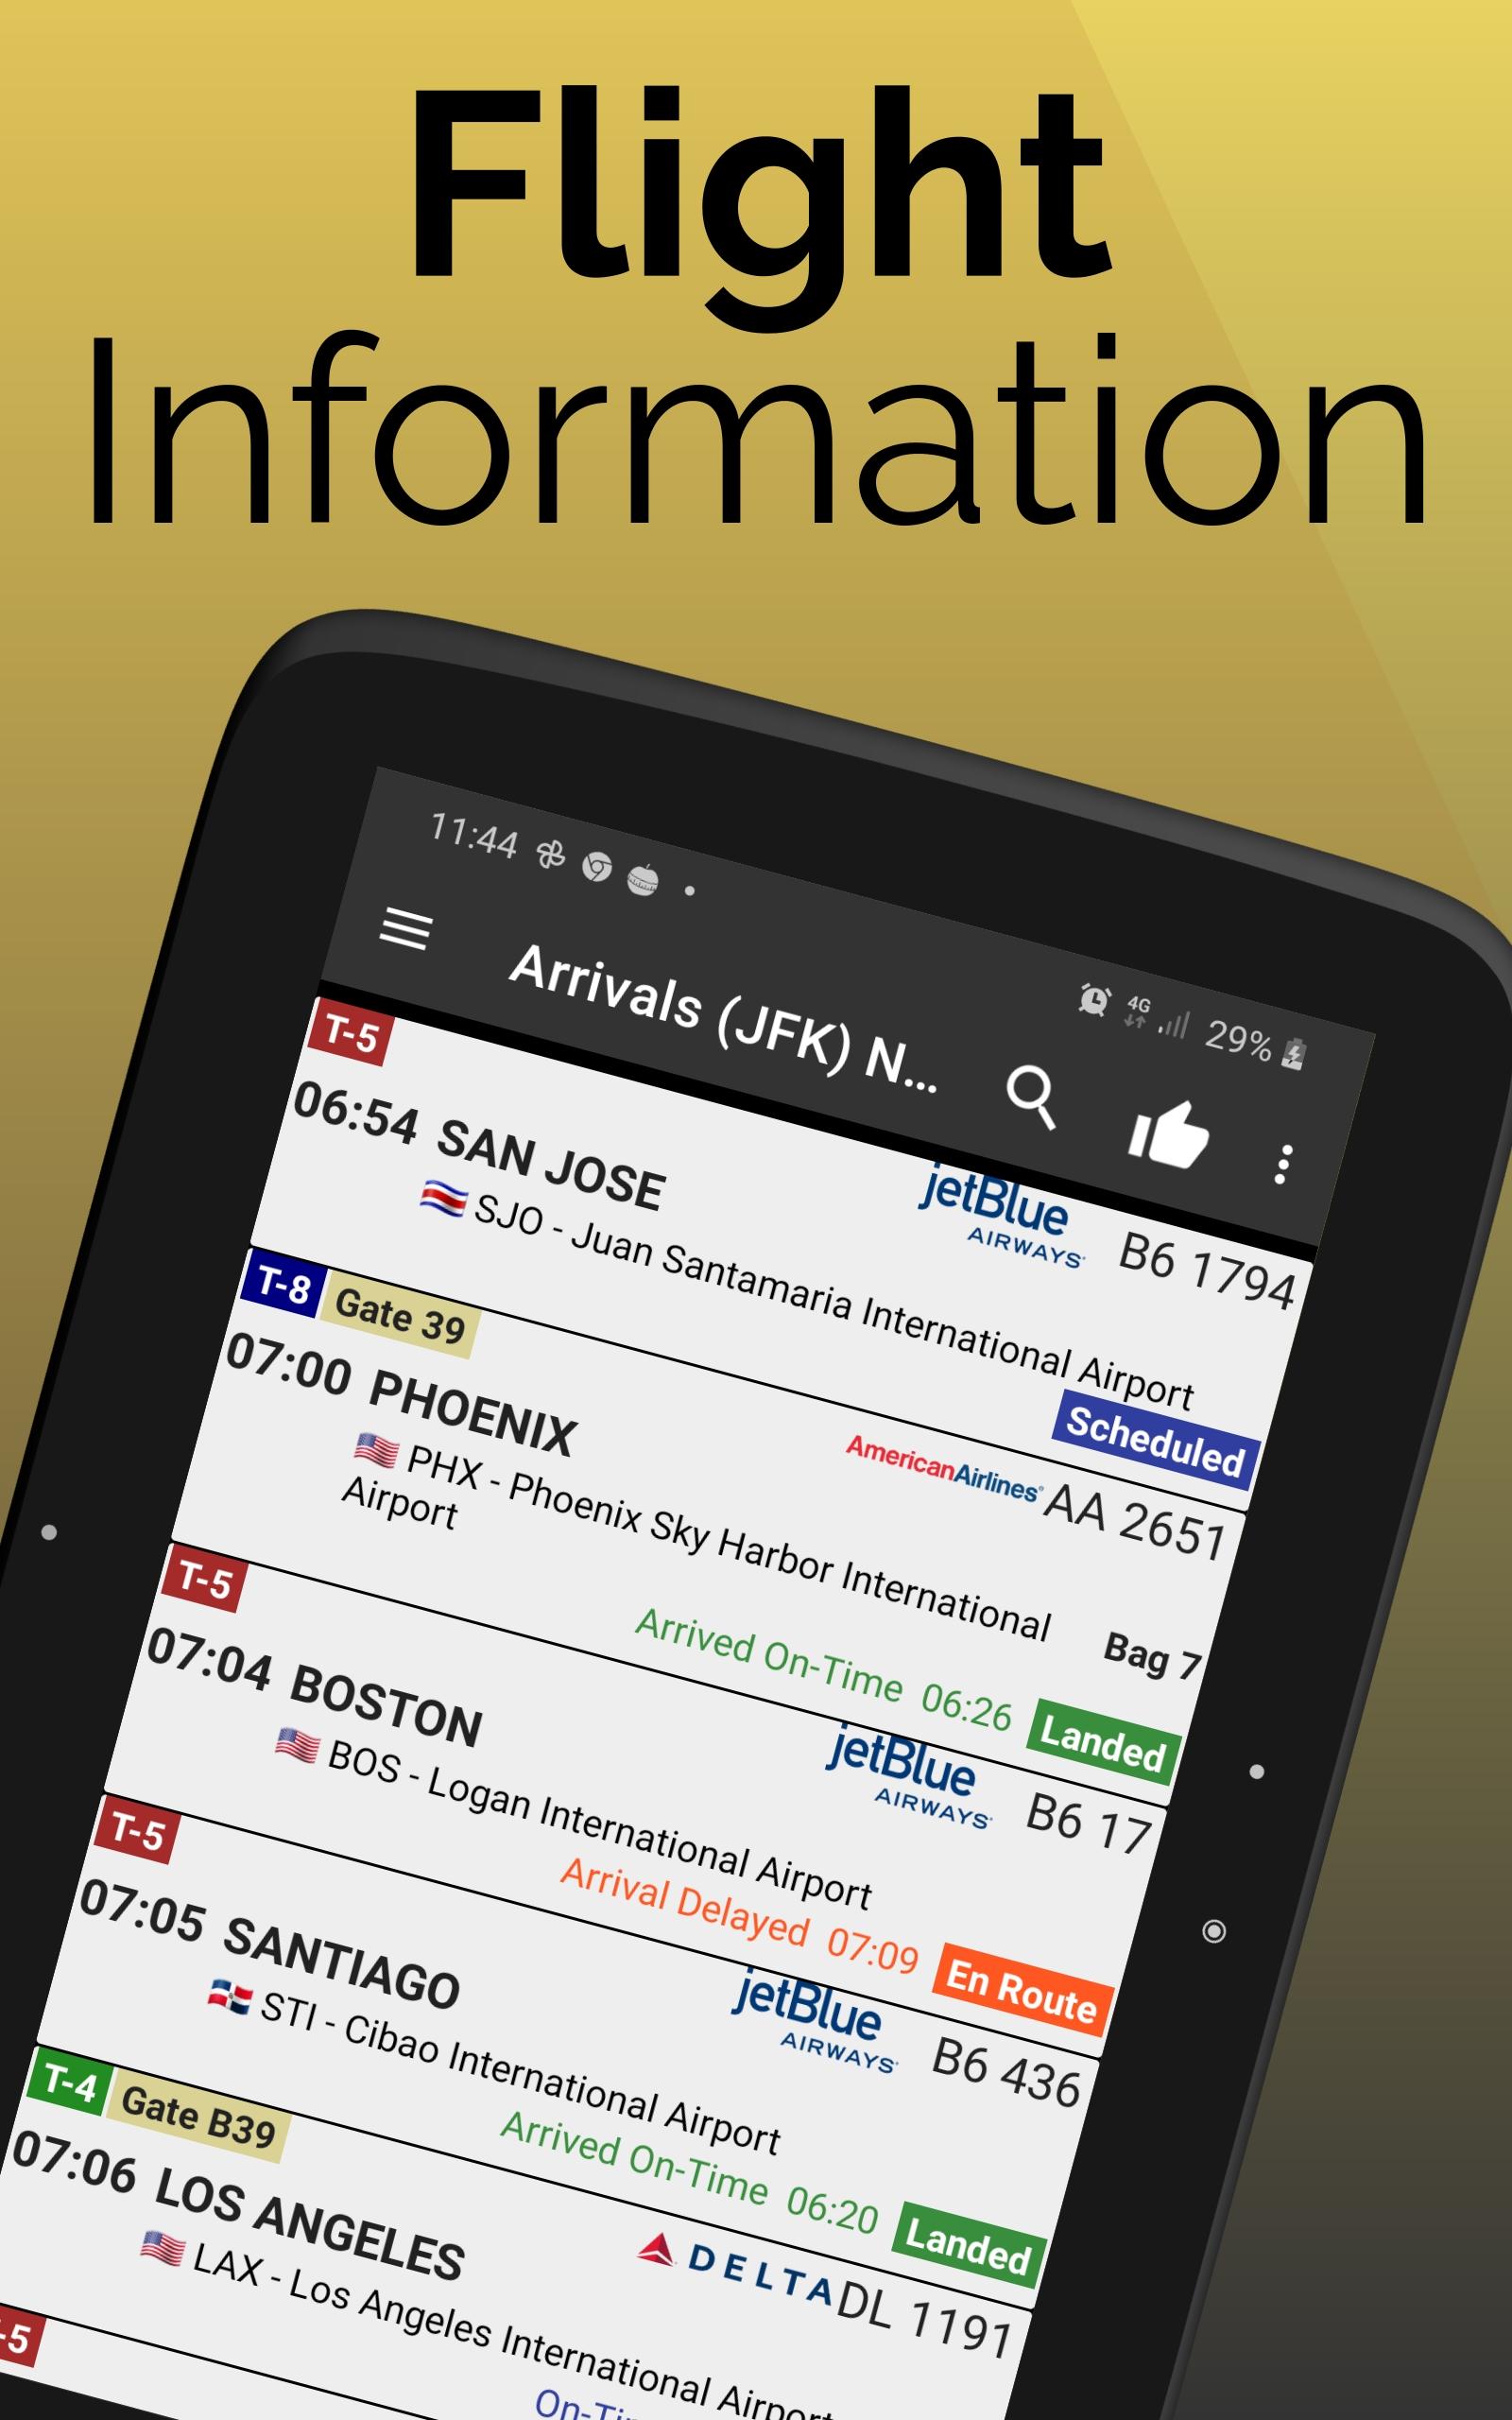 Hamburg Airport: Flight Information